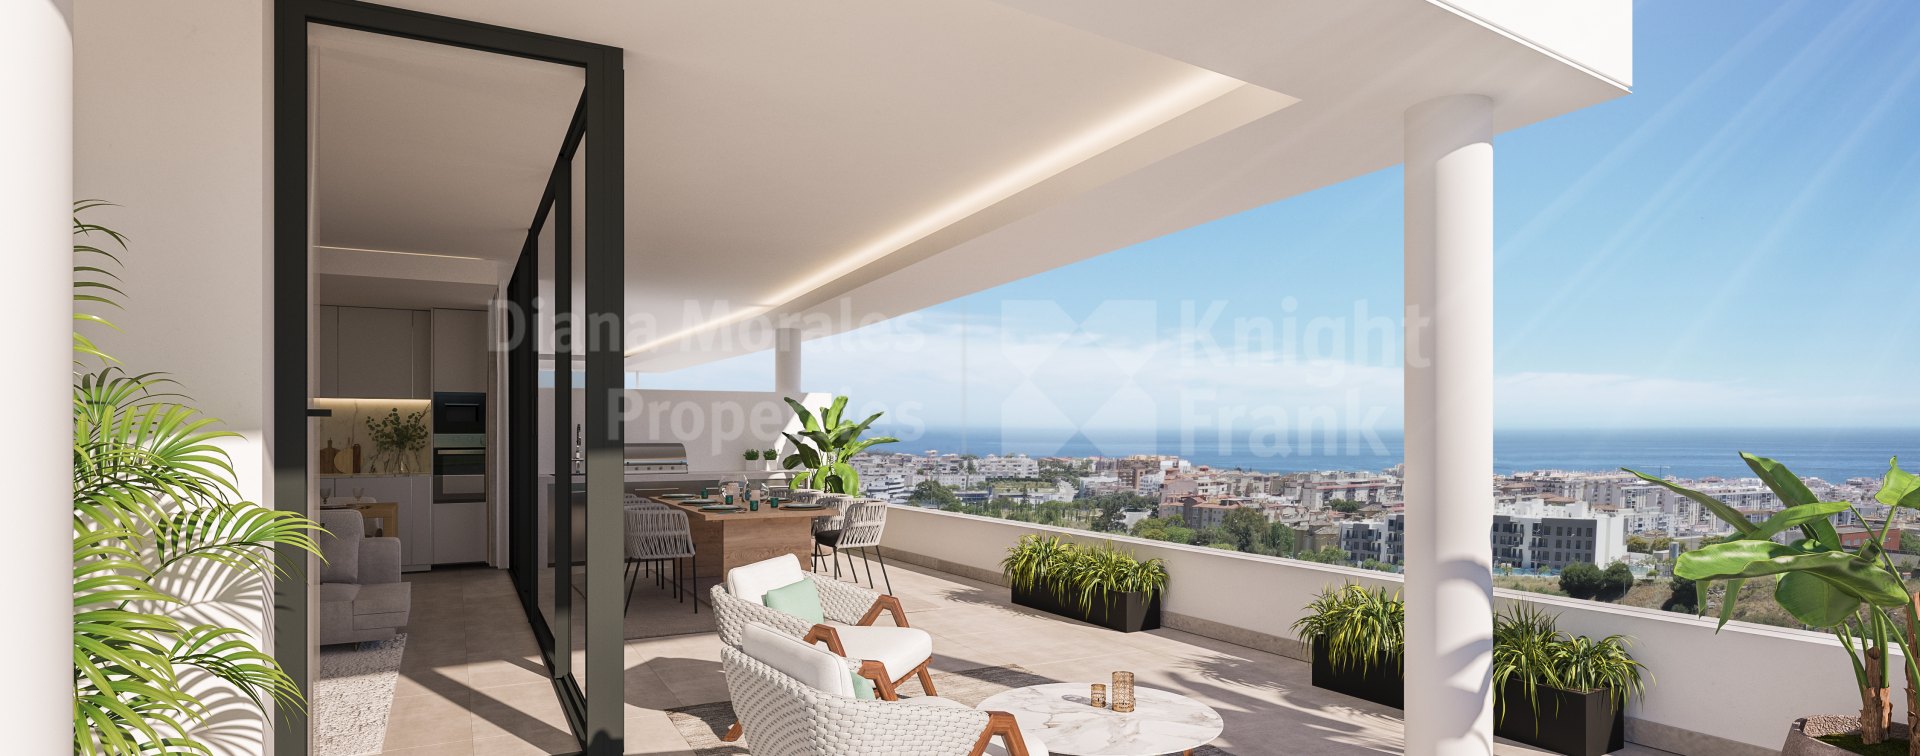 Estepona, 3-bedroom duplex penthouse with sea views